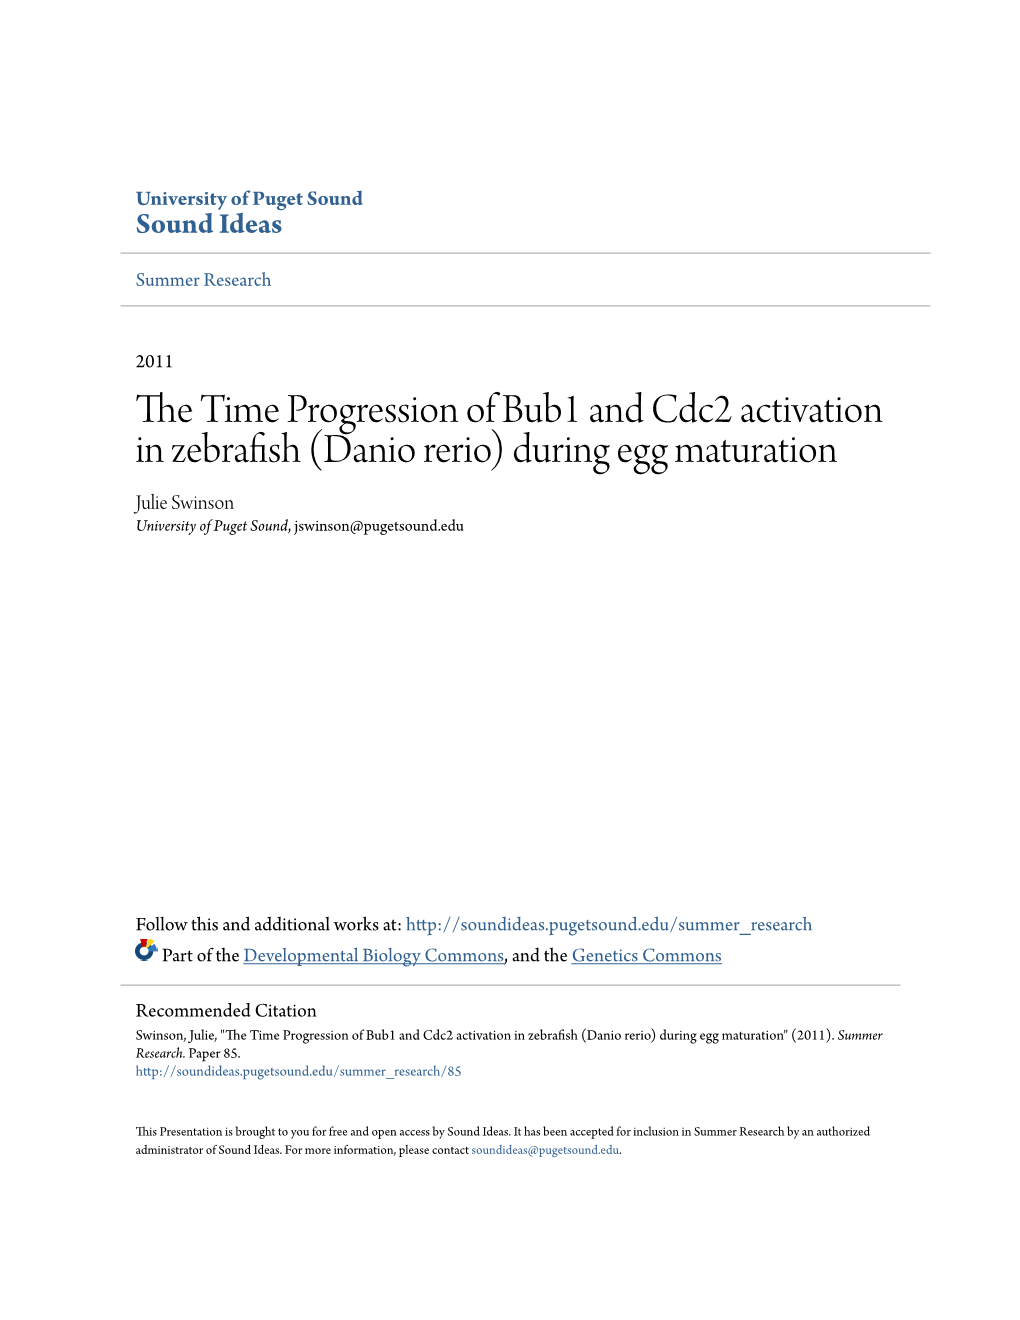 The Time Progression of Bub1 and Cdc2 Activation in Zebrafish (Danio